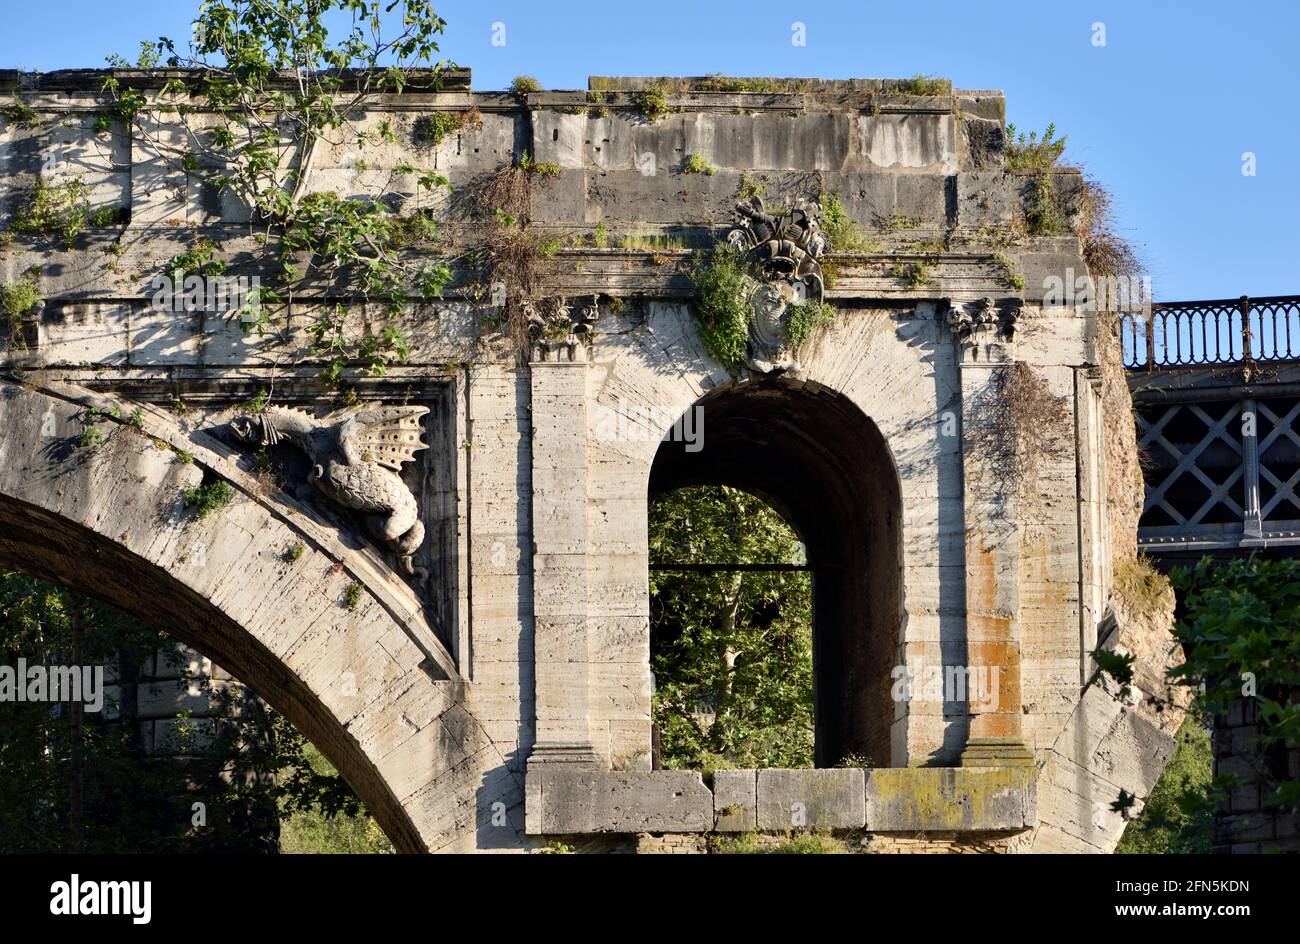 Italy, Rome, Tiber river, Ponte Rotto (broken bridge), Pons Aemilius, ancient roman bridge Stock Photo